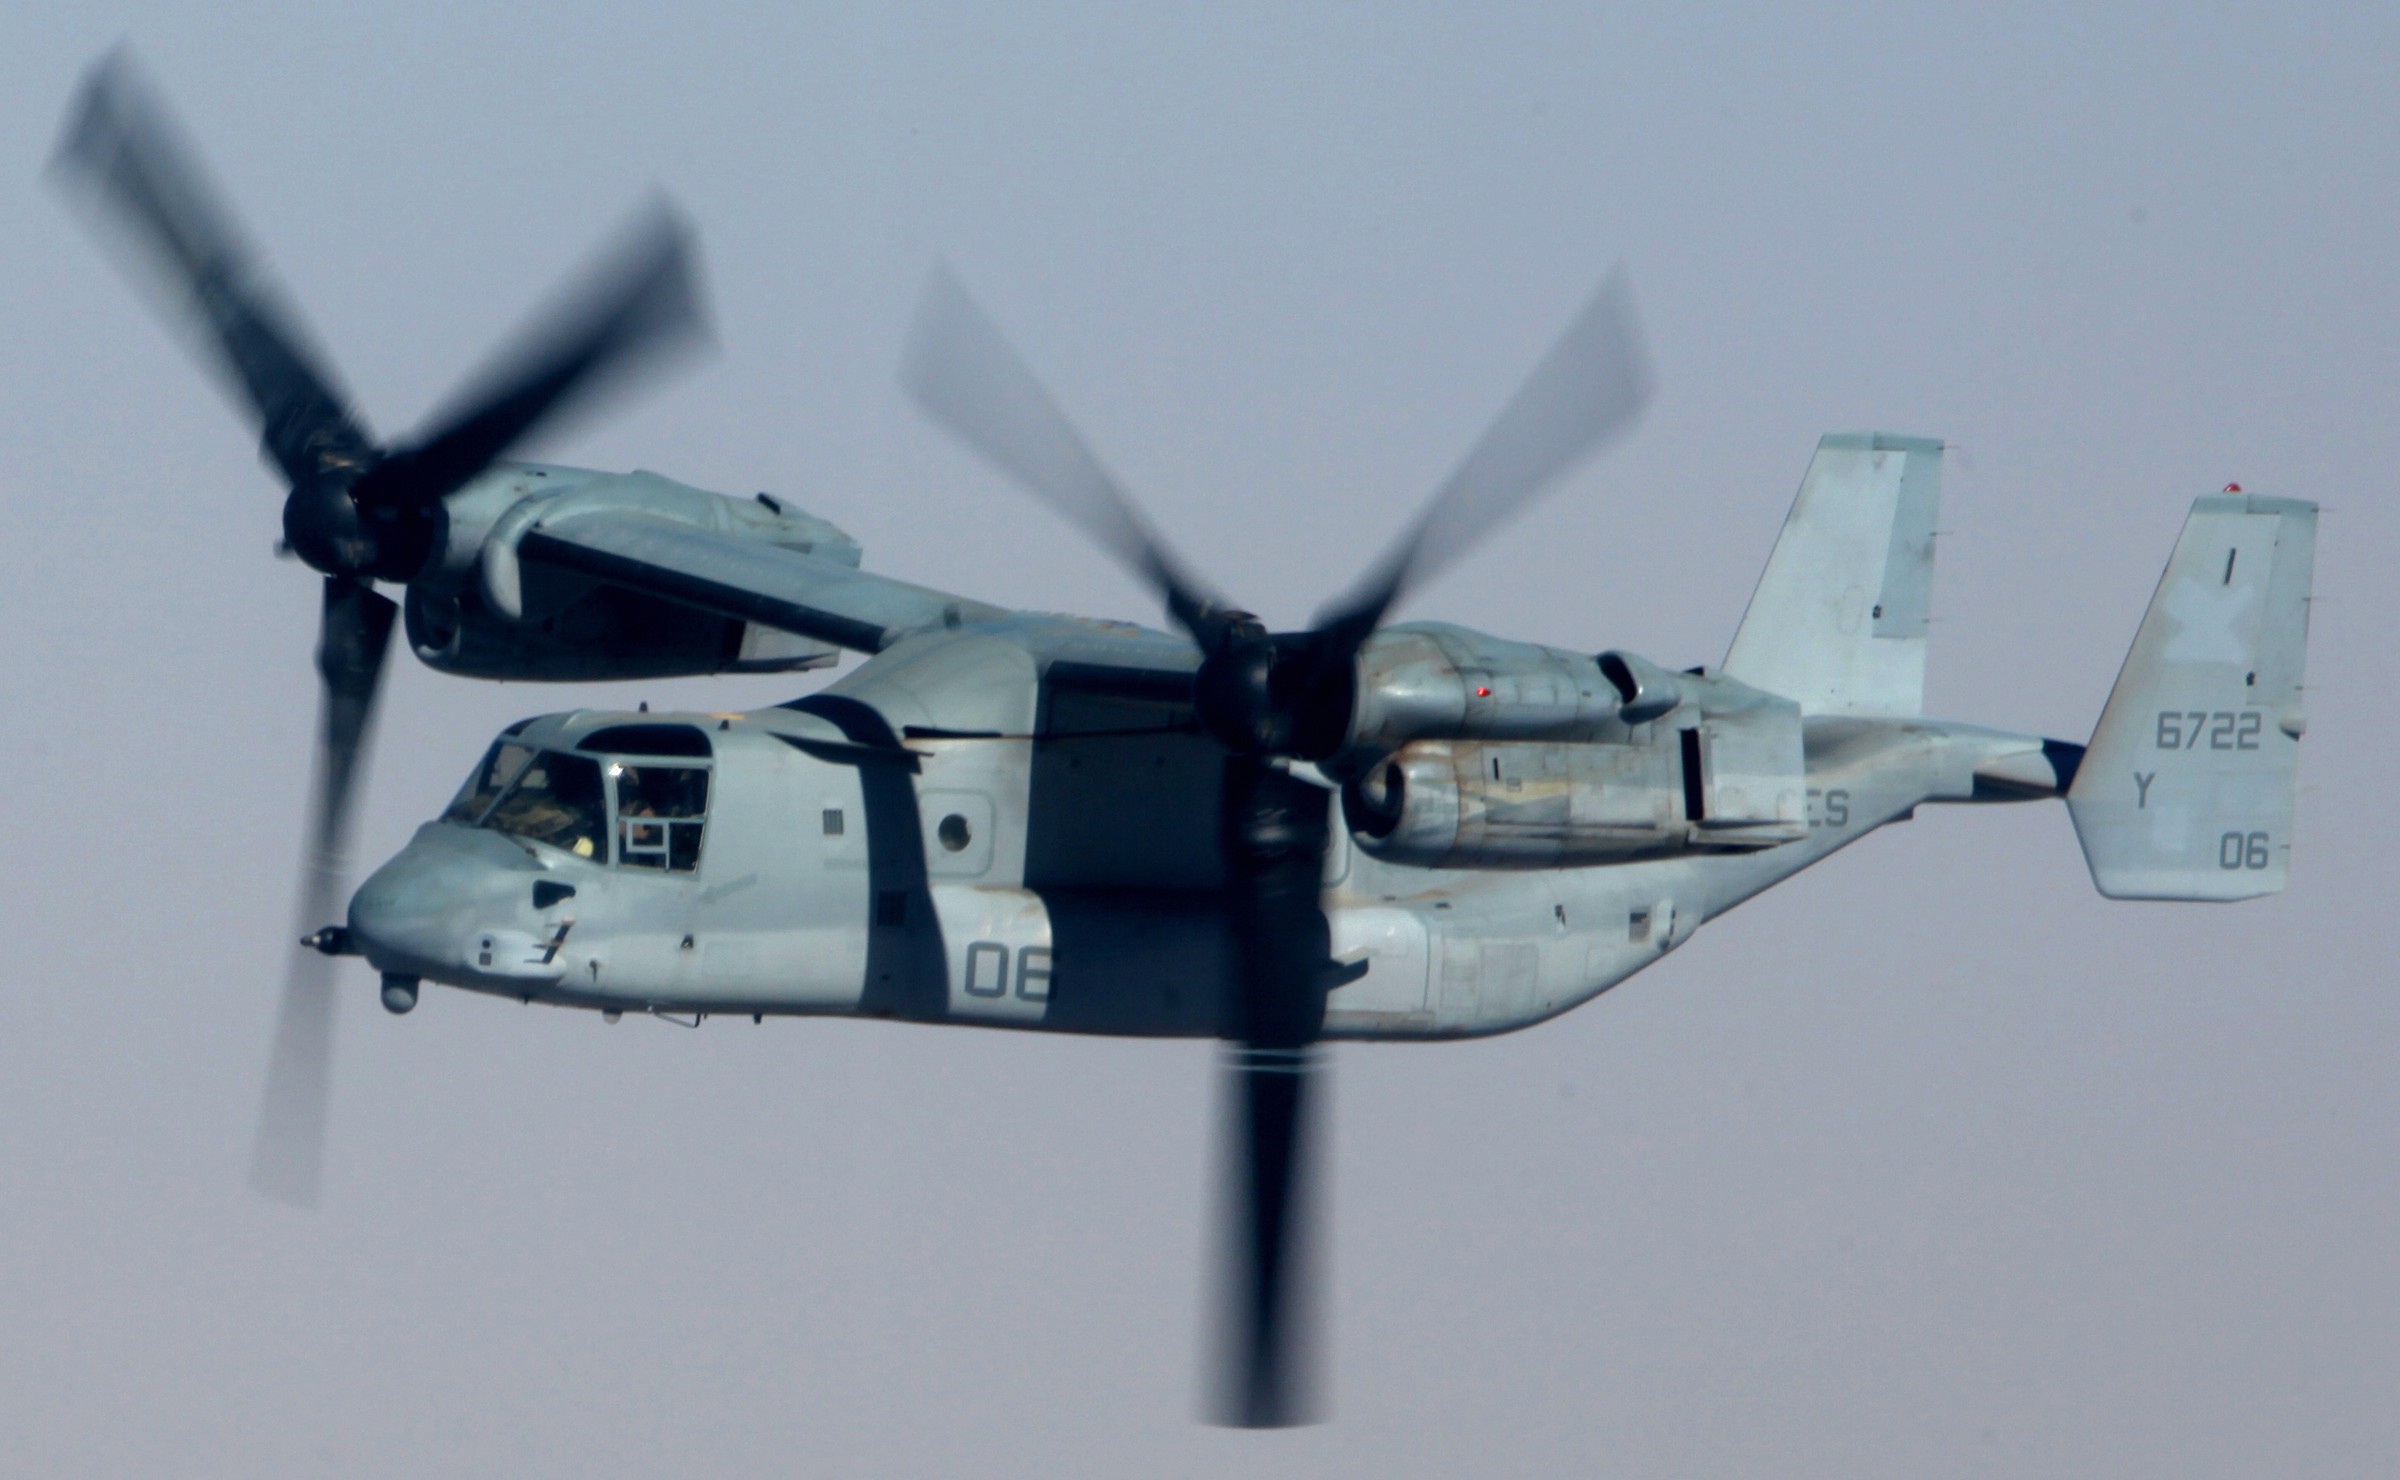 vmm-161 greyhawks mv-22b osprey marine medium tiltrotor squadron usmc 137 over afghanistan